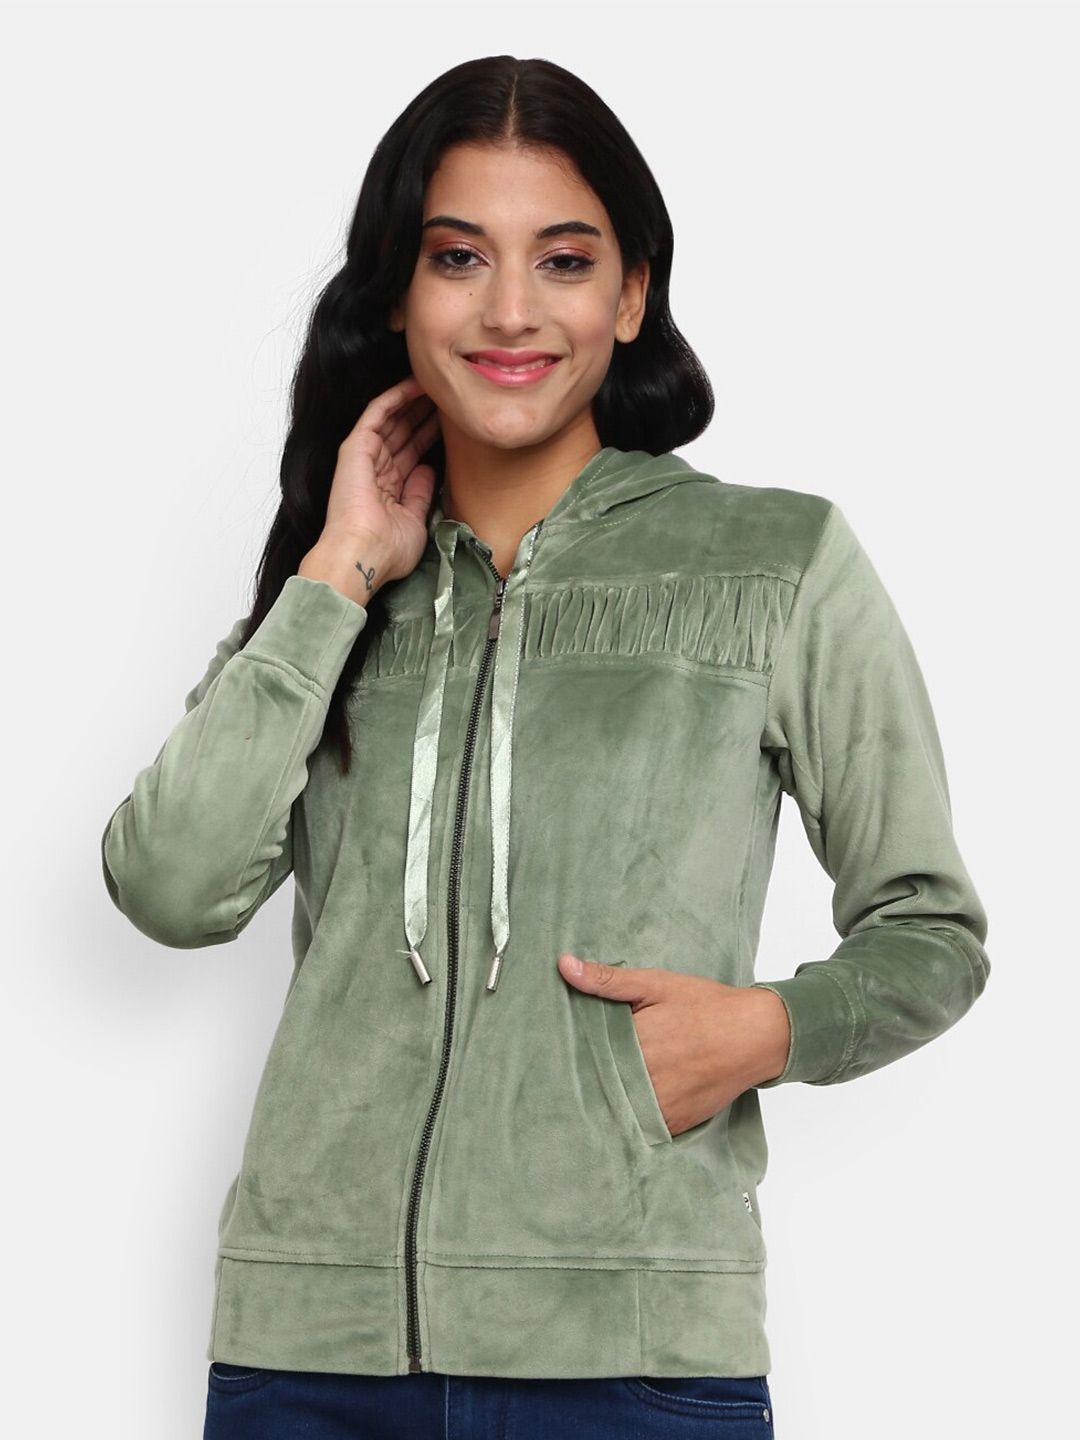 v-mart women green printed hooded sweatshirt